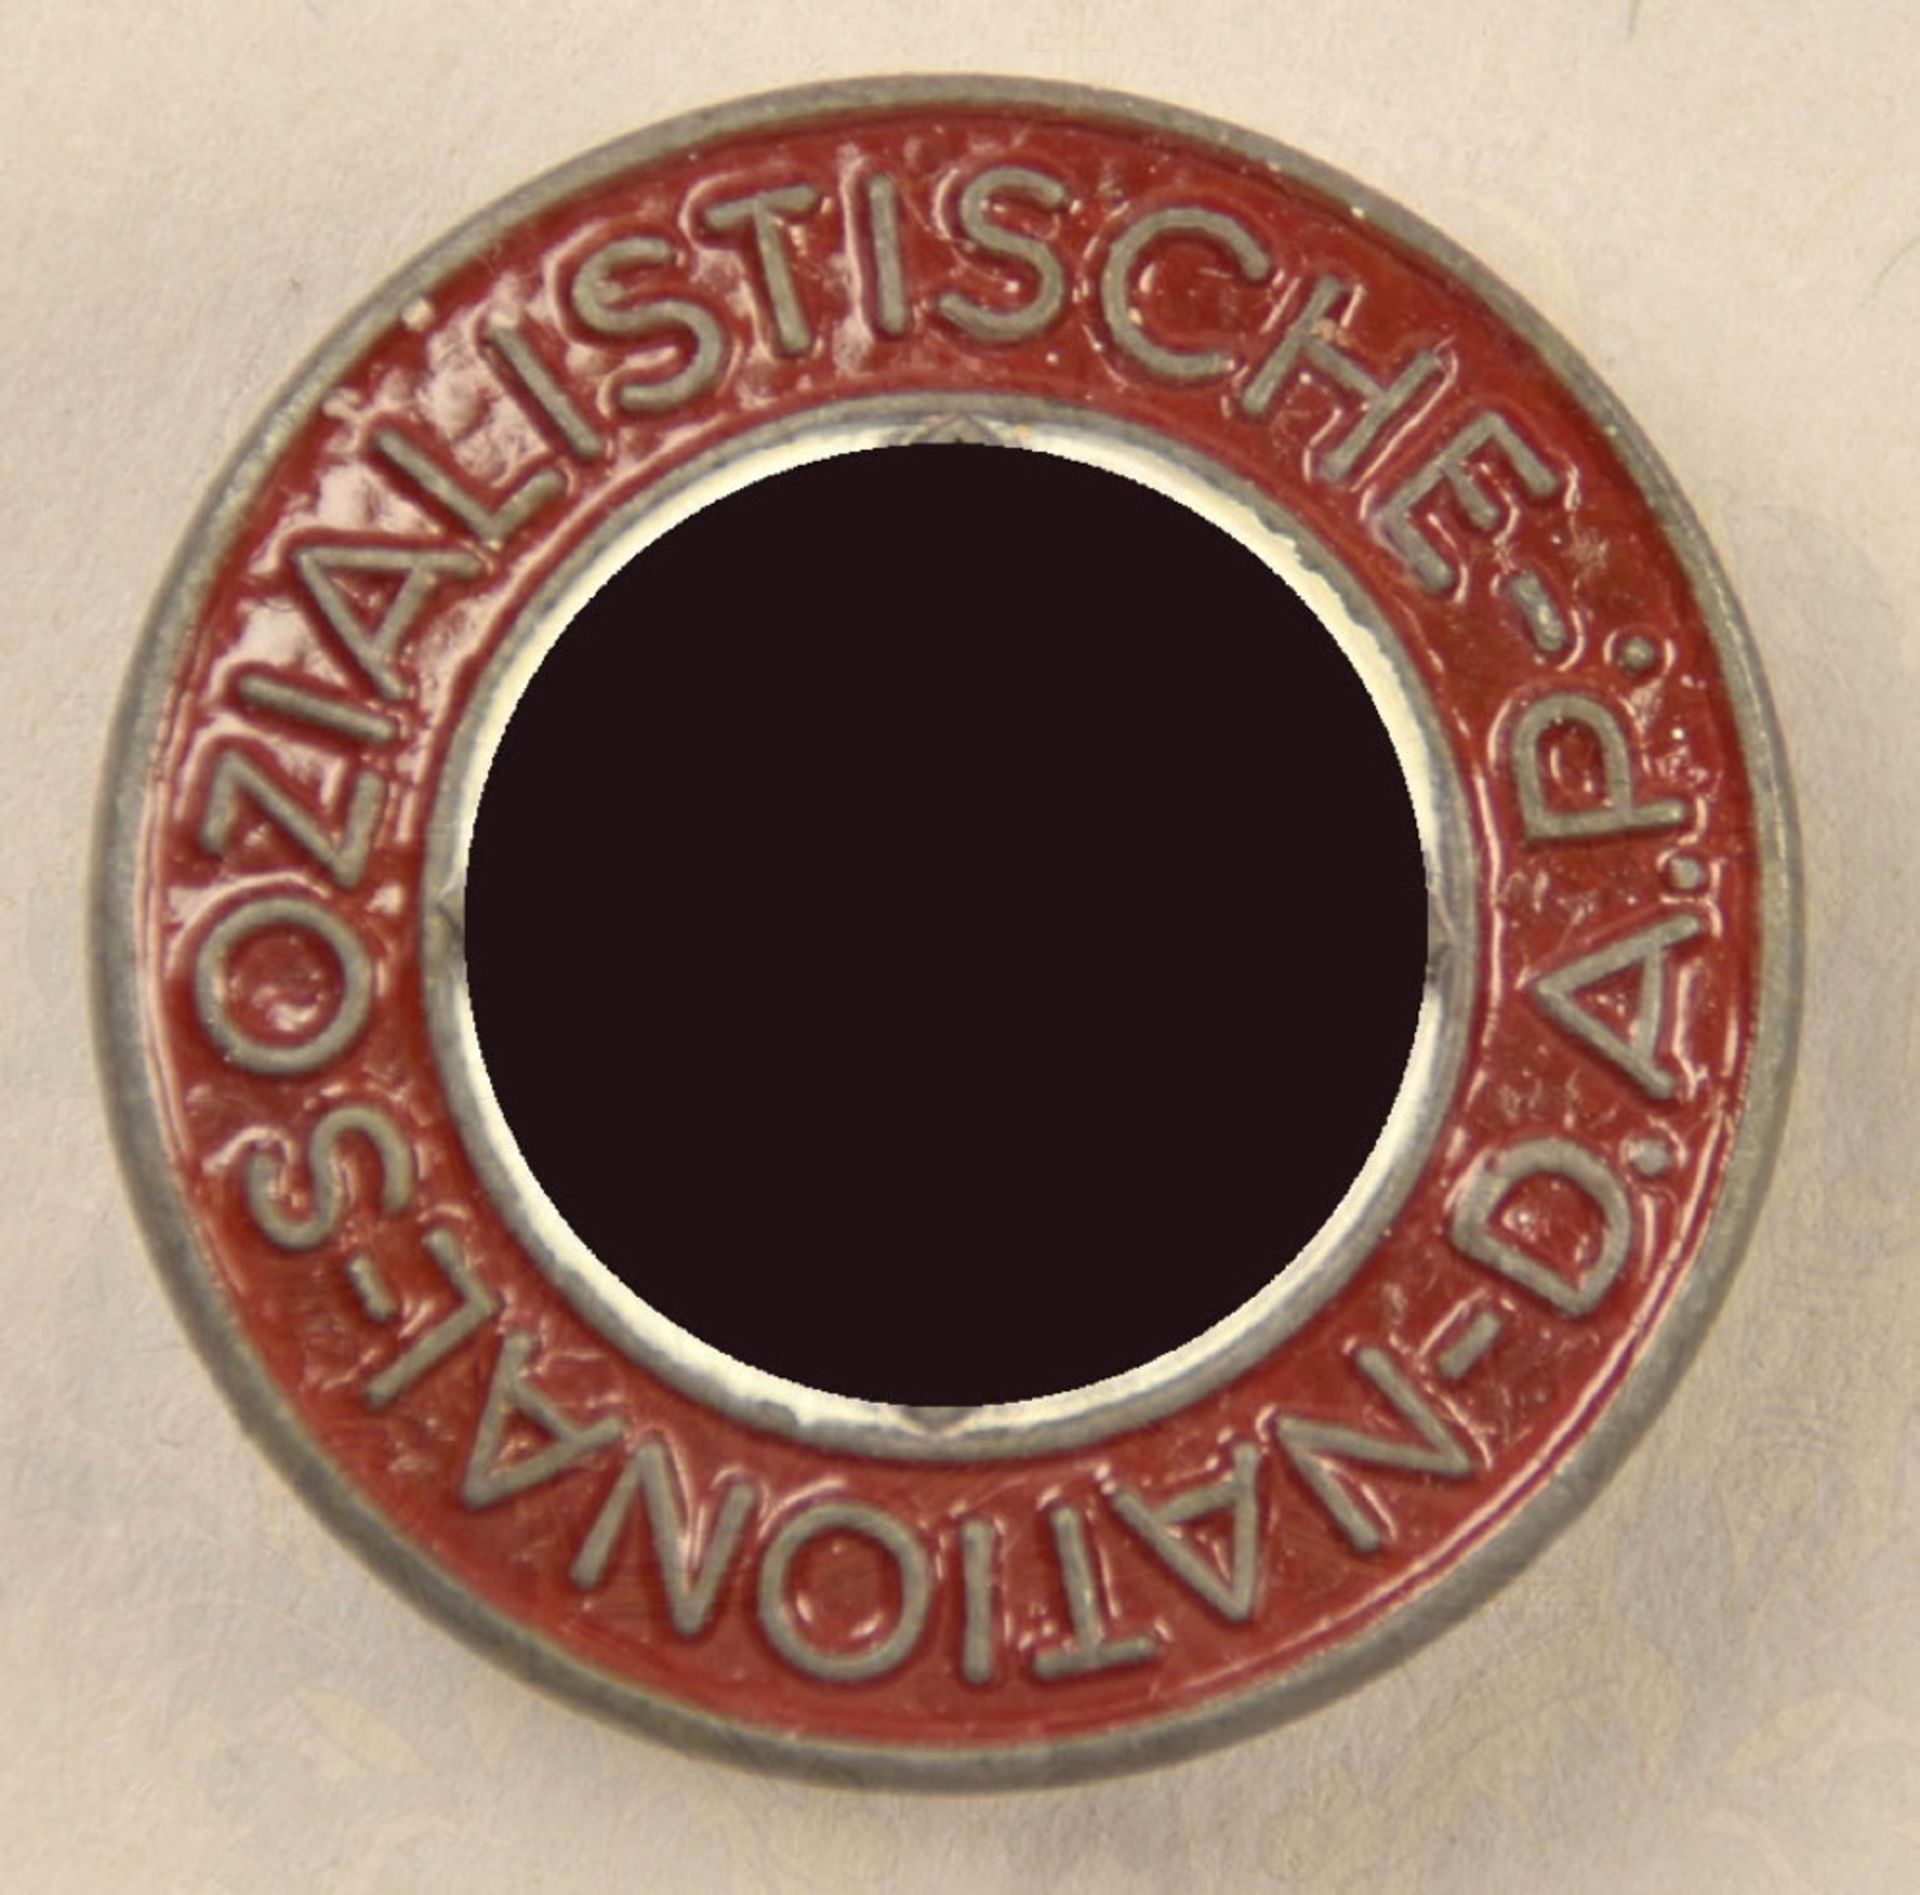 NSDAP membership badge with maker M1/42